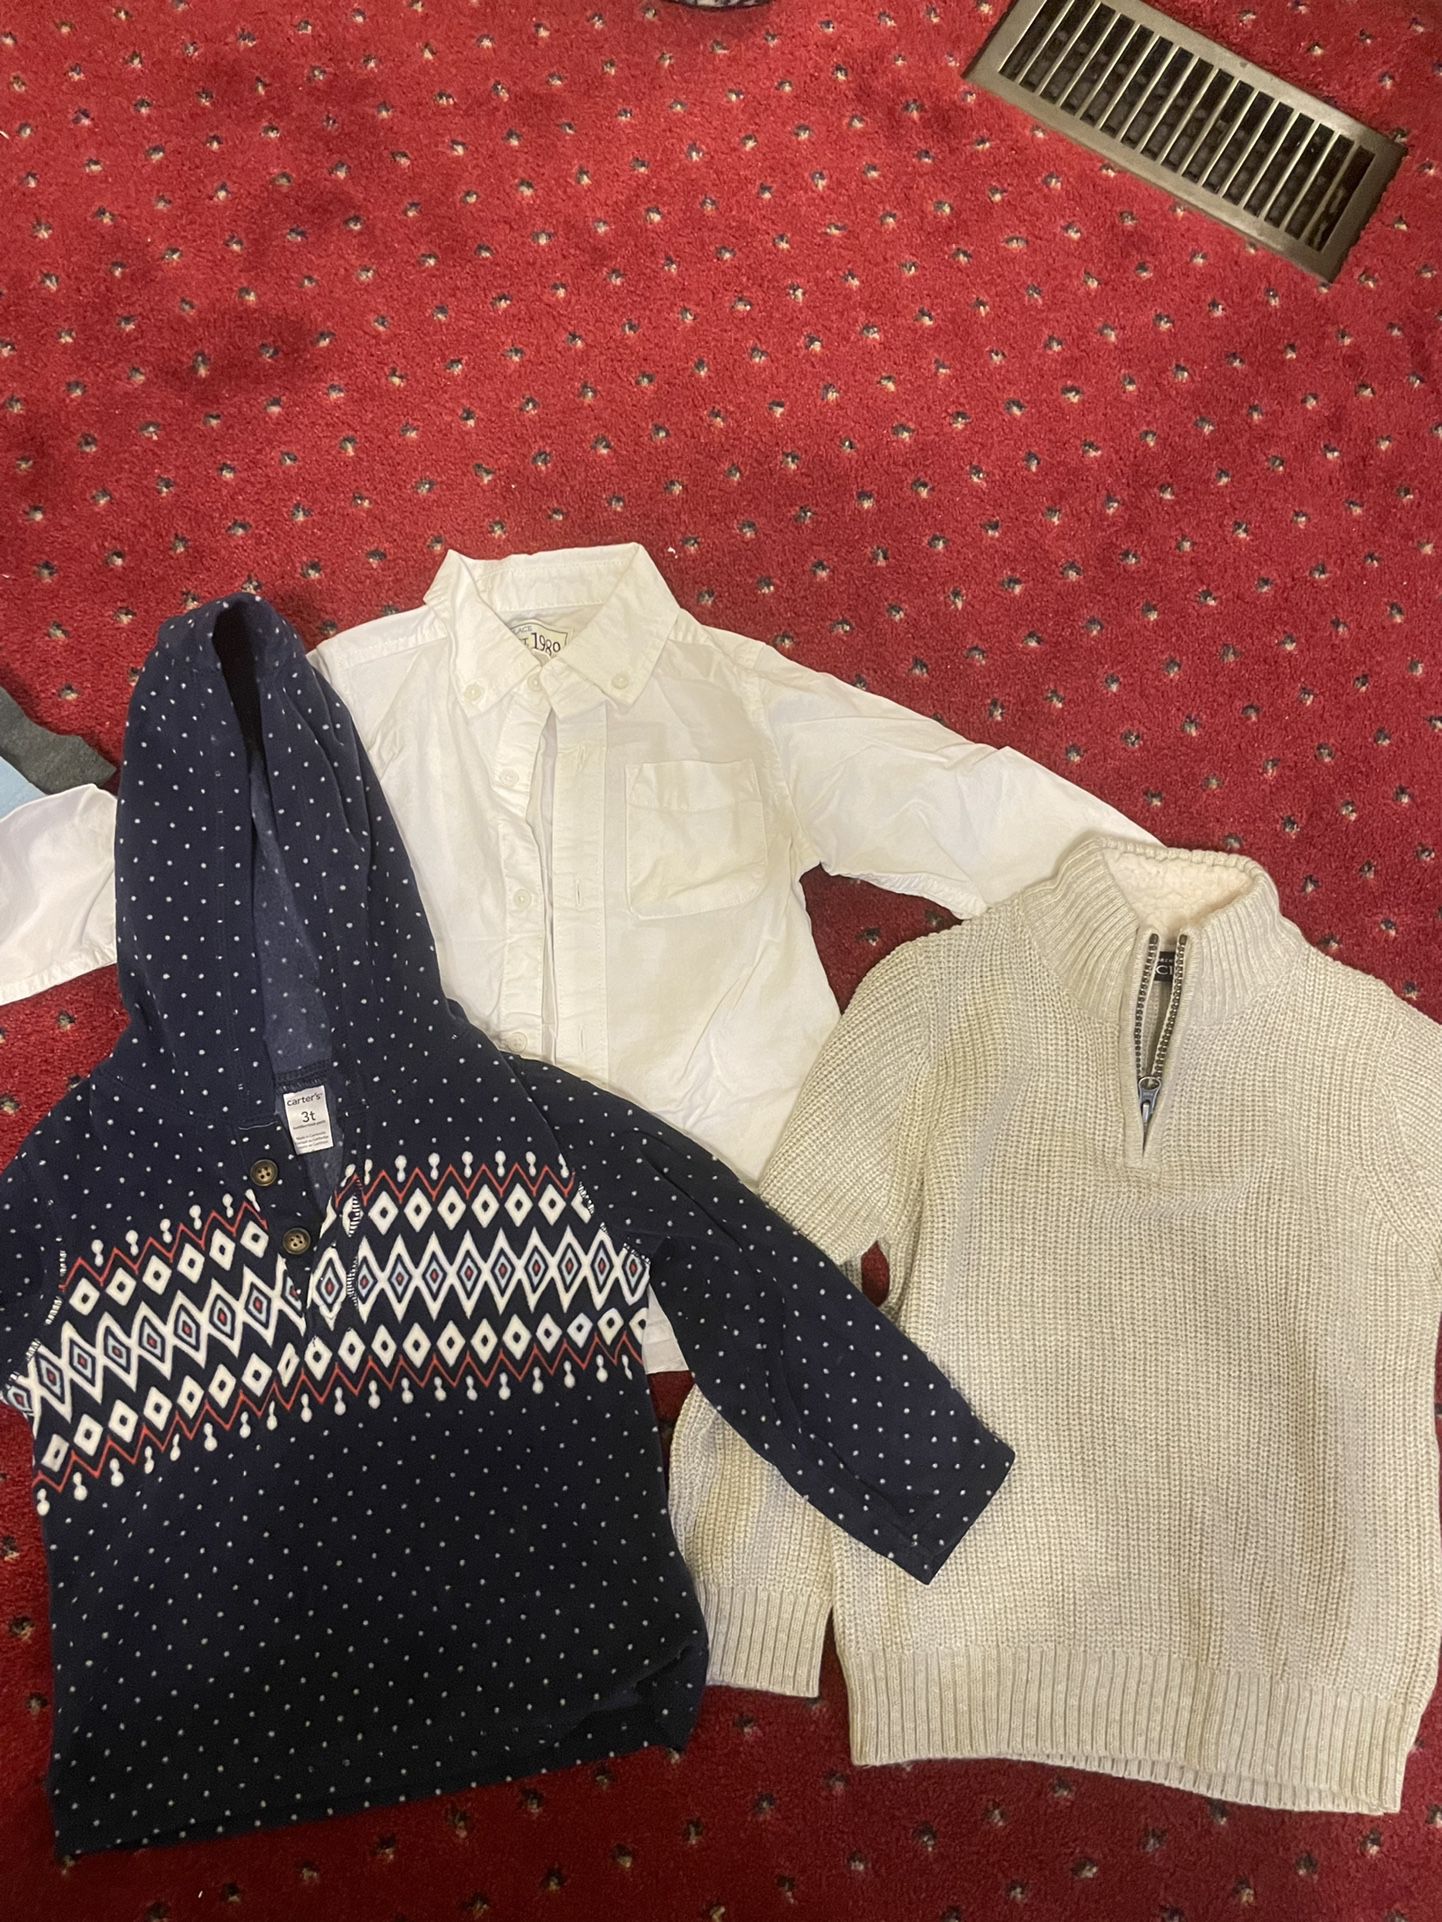 Boys 3T Dress Sweaters